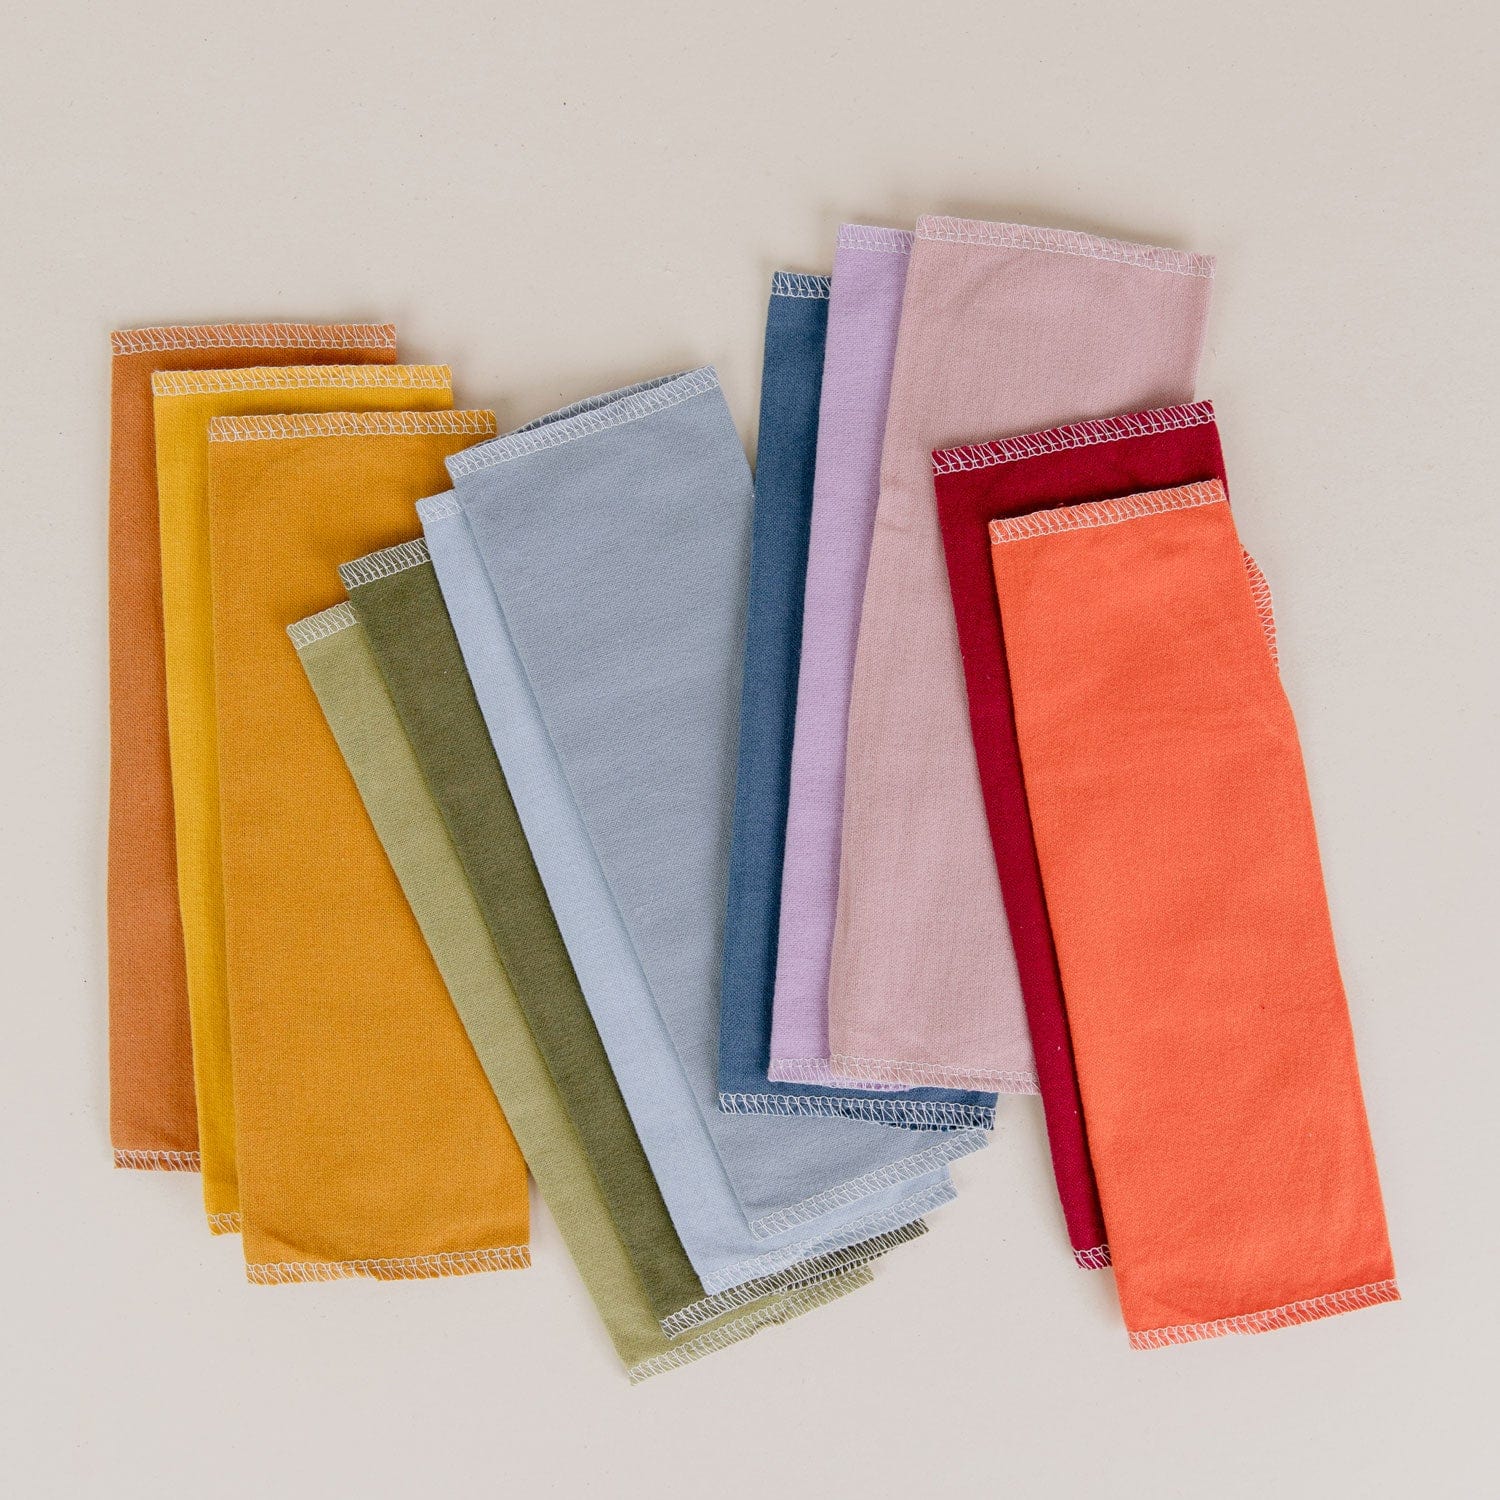 ZeroWasteStore Reusable Paper Towels - 100% Organic Cotton, 12 or 24 Pack